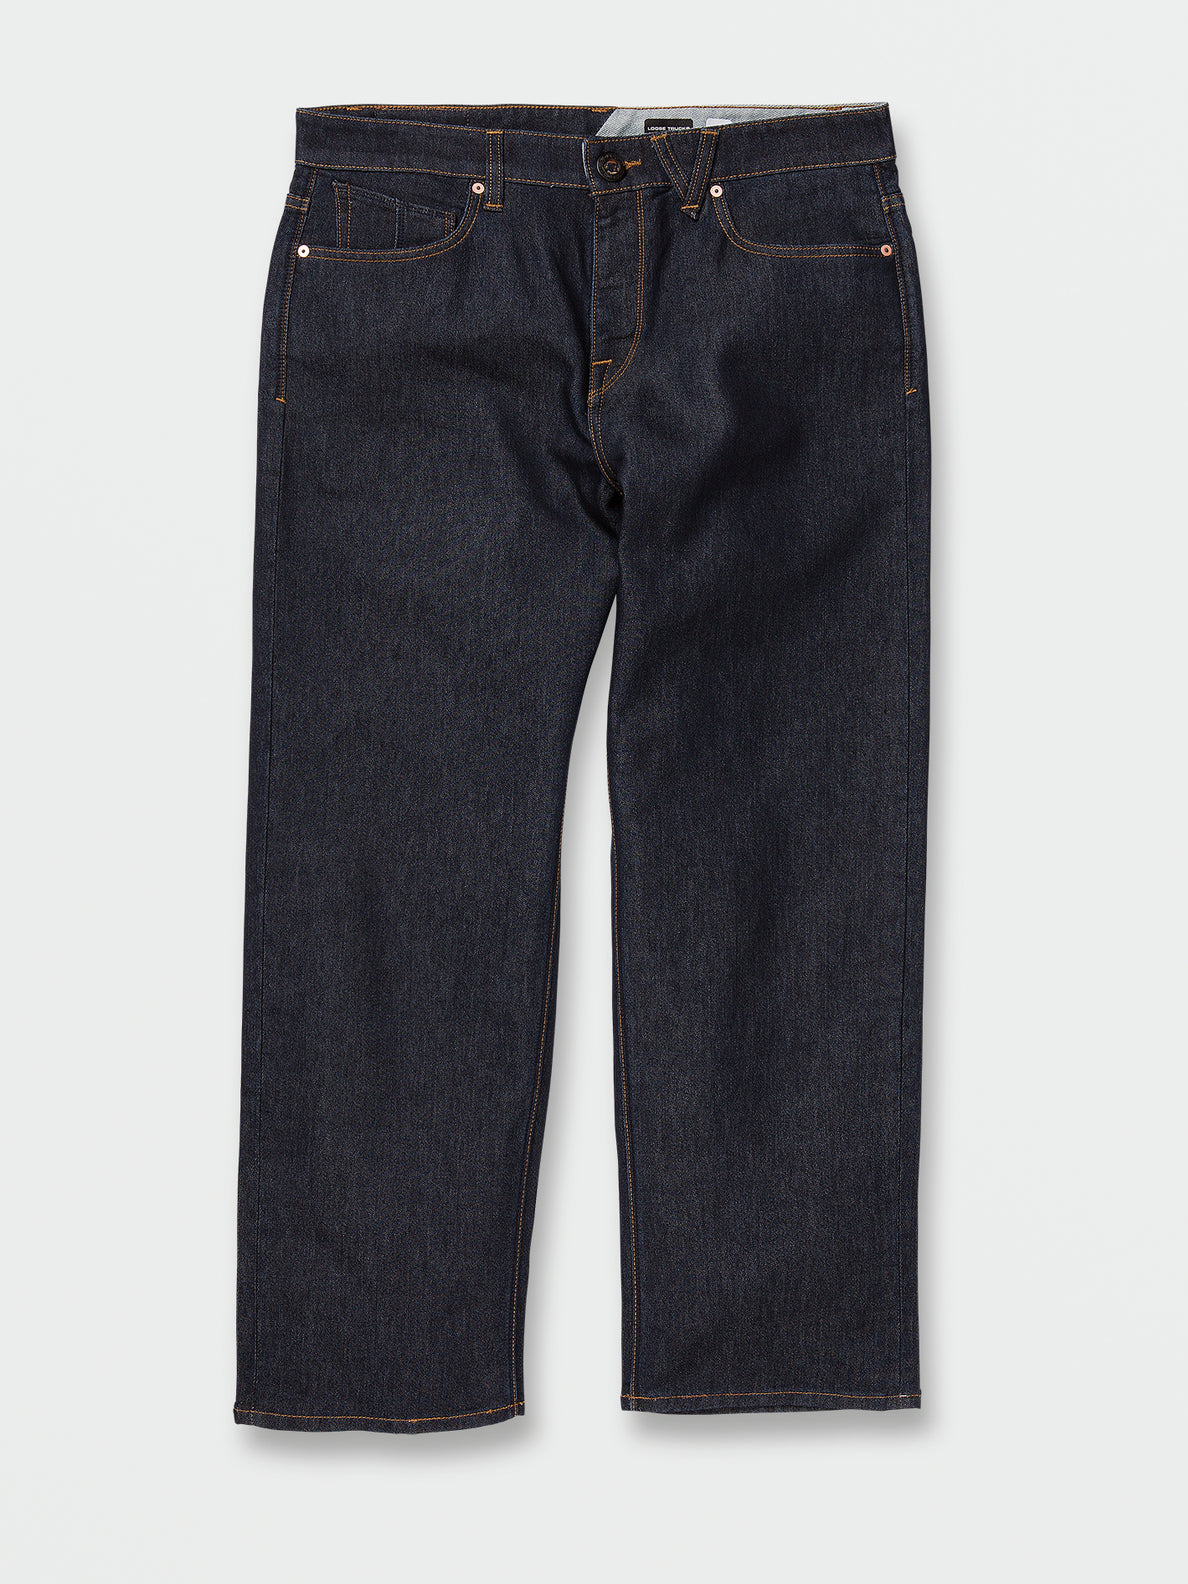 Nailer Jeans - Dust Bowl Indigo (A1942200_DBL) [F]